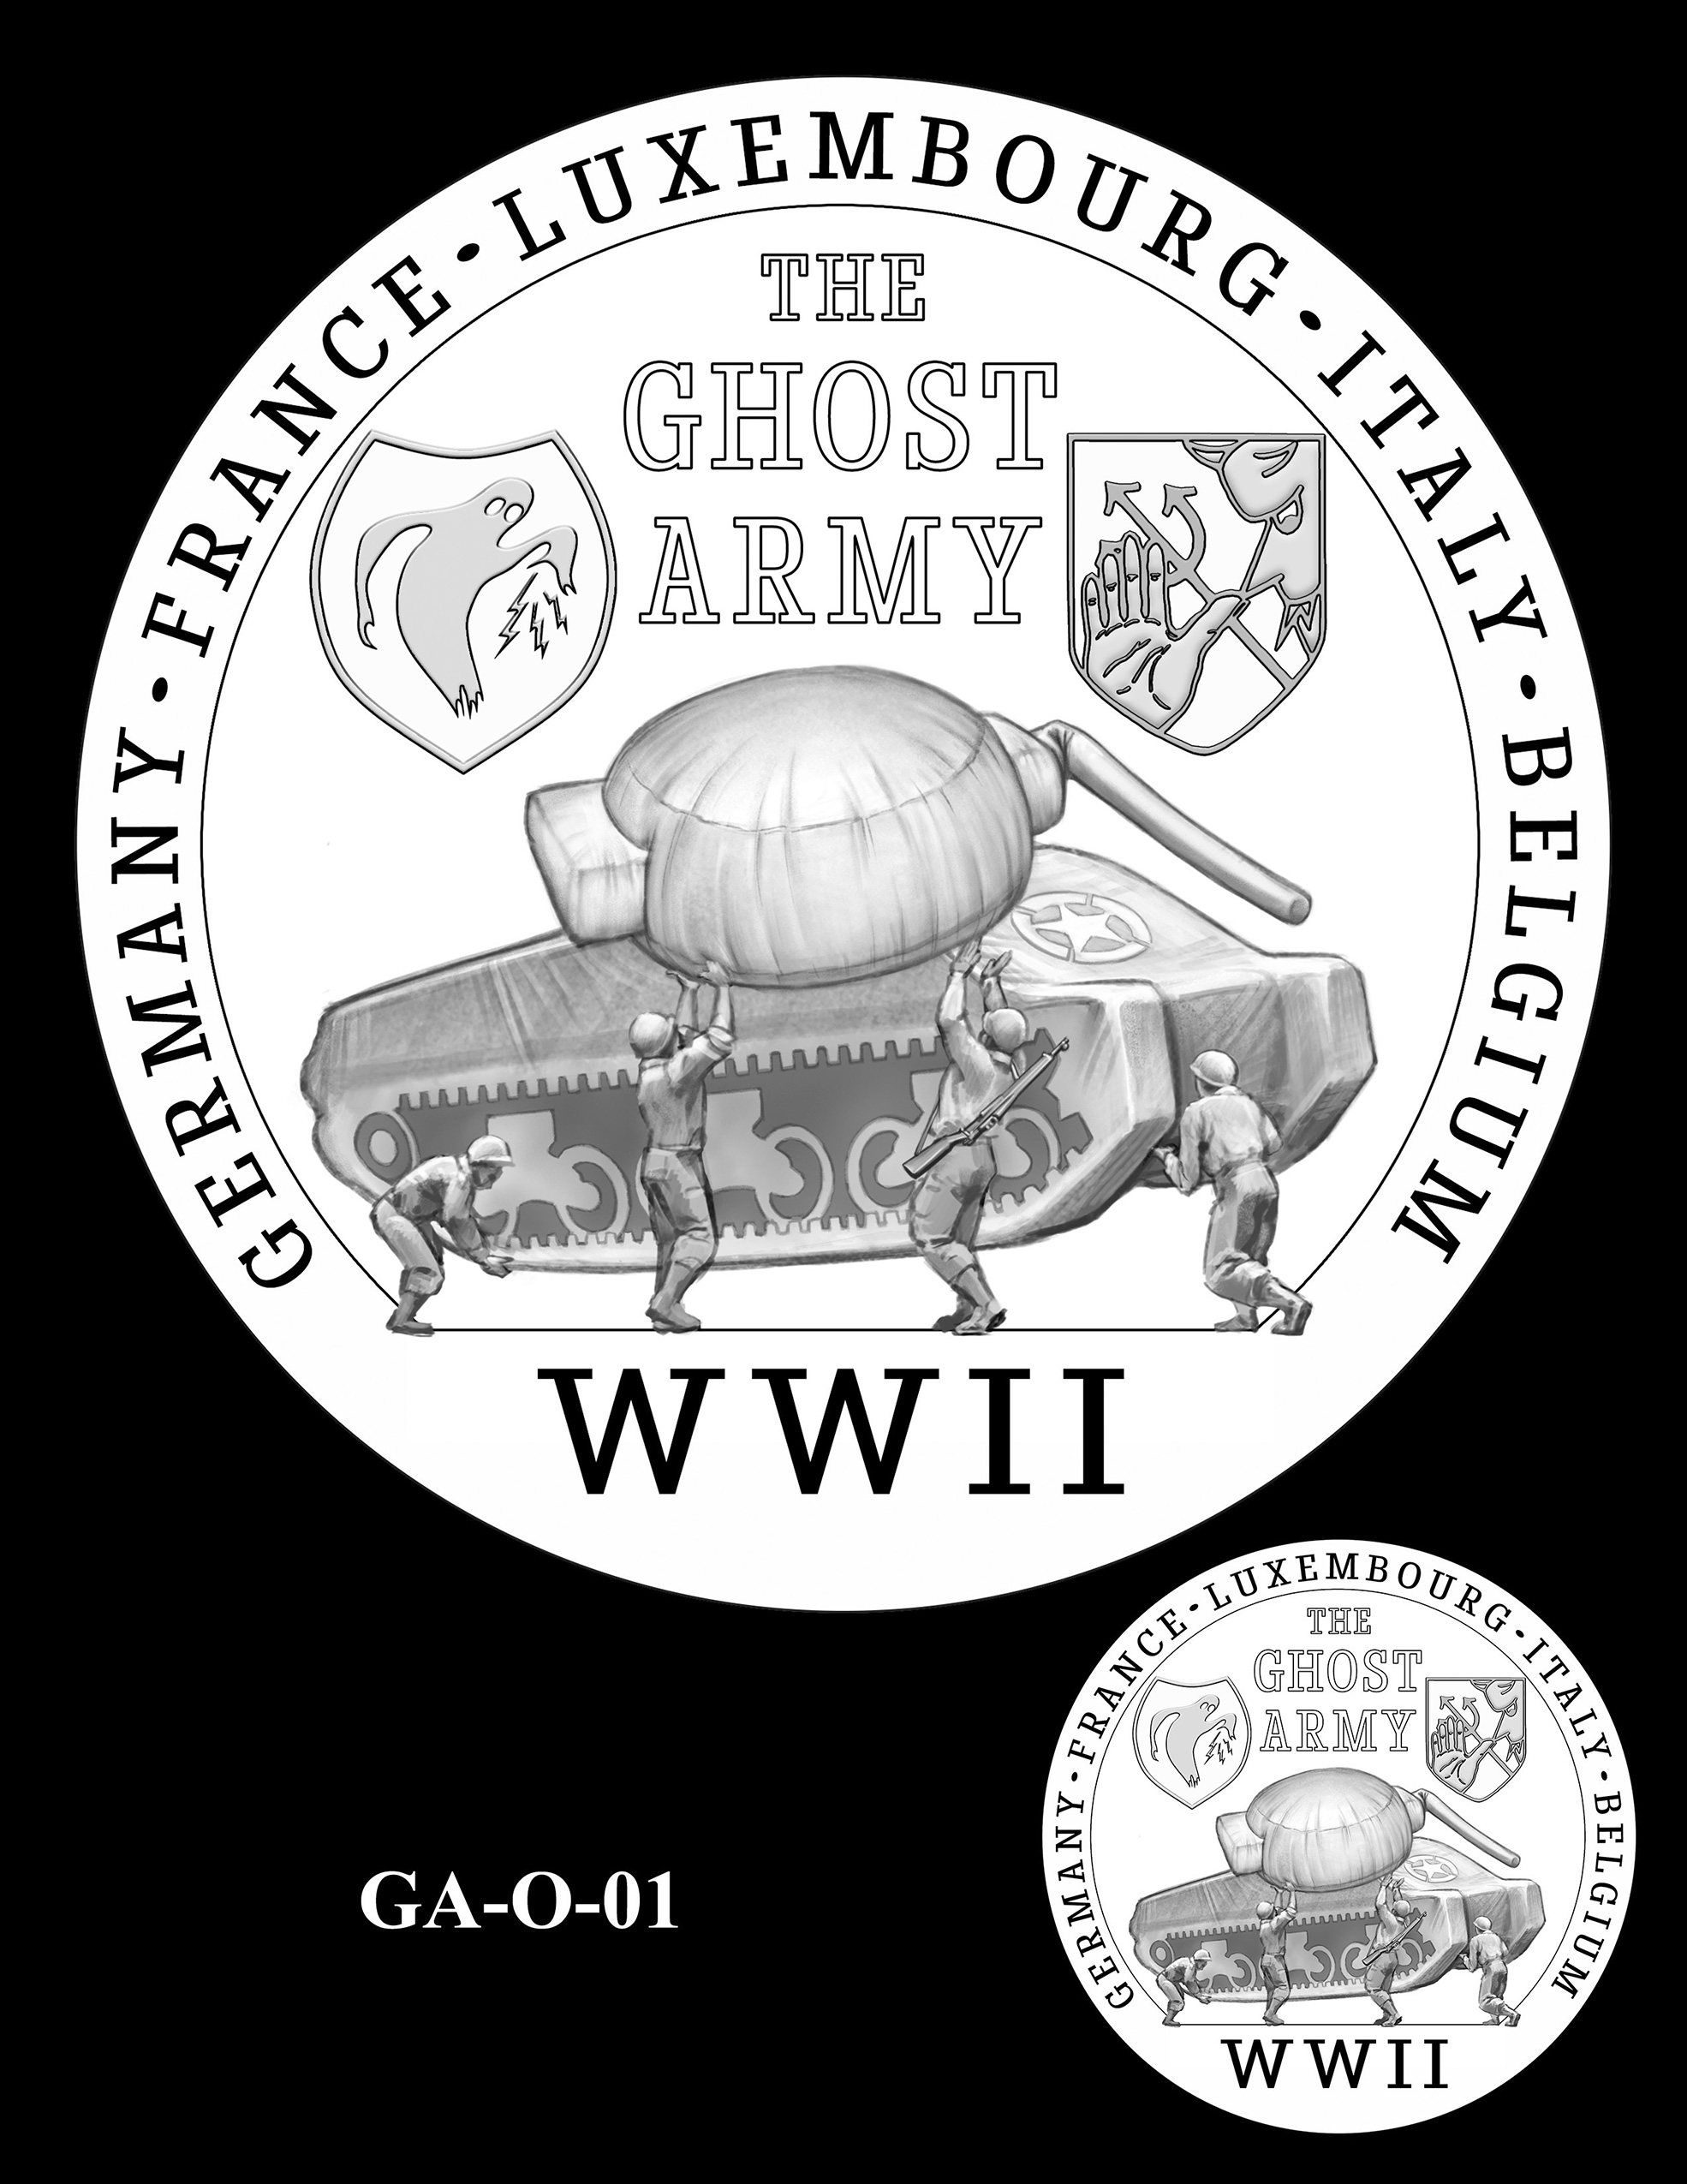 GA-O-01 -- Ghost Army Congressional Gold Medal